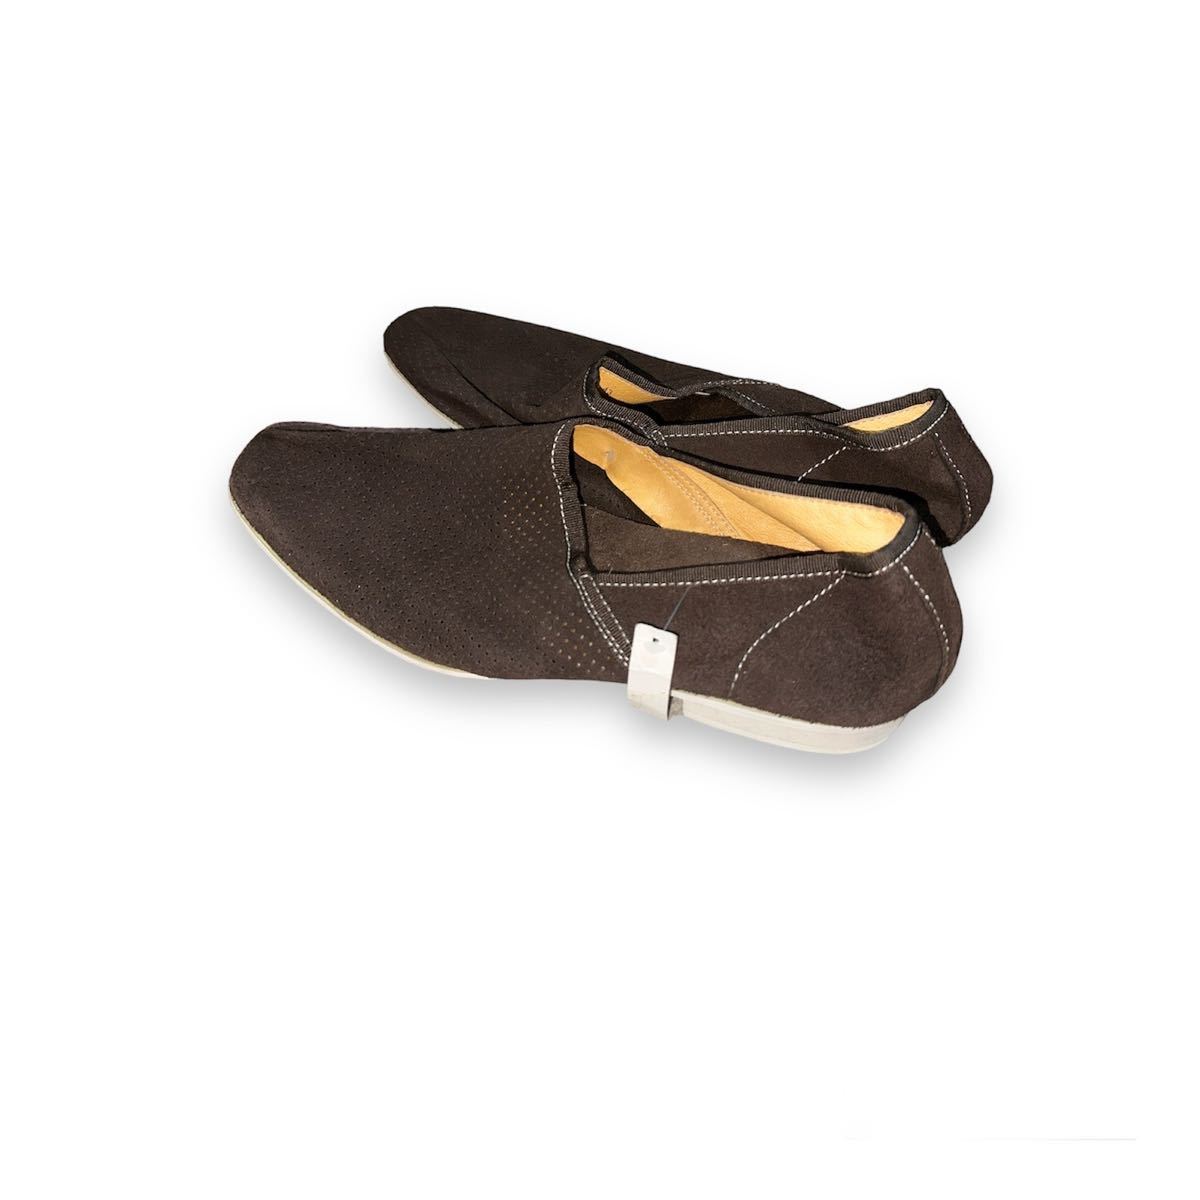 JEFFSTAR Loafer обувь замша туфли без застежки Brown новый товар не использовался натуральная кожа задний s gold 43 размер 